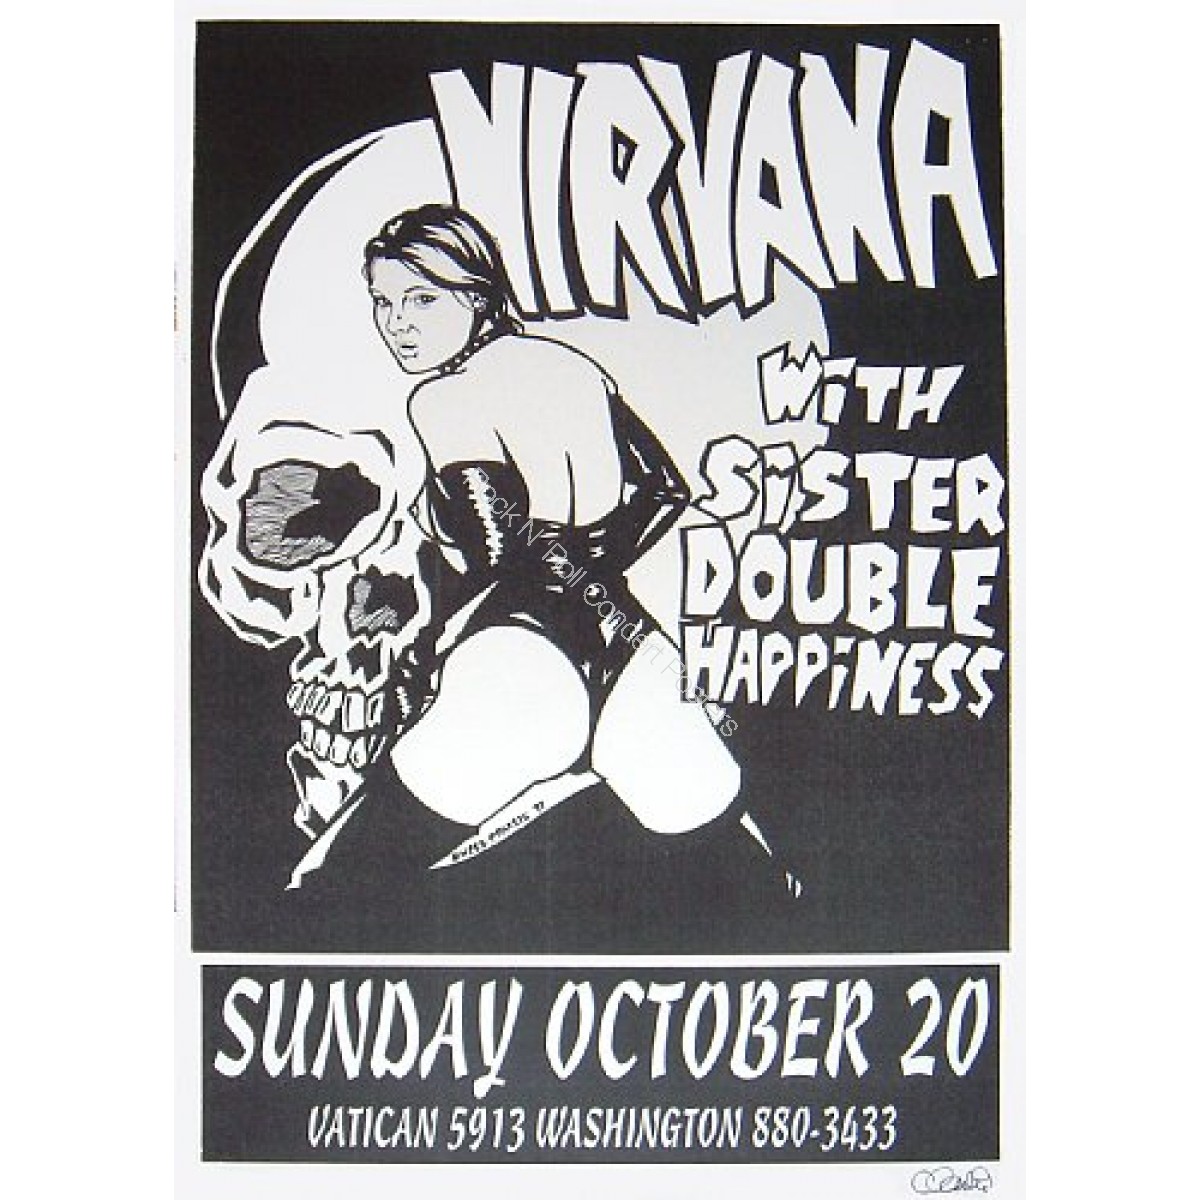 Nirvana @ The Vatican Houston Texas 10/20/91